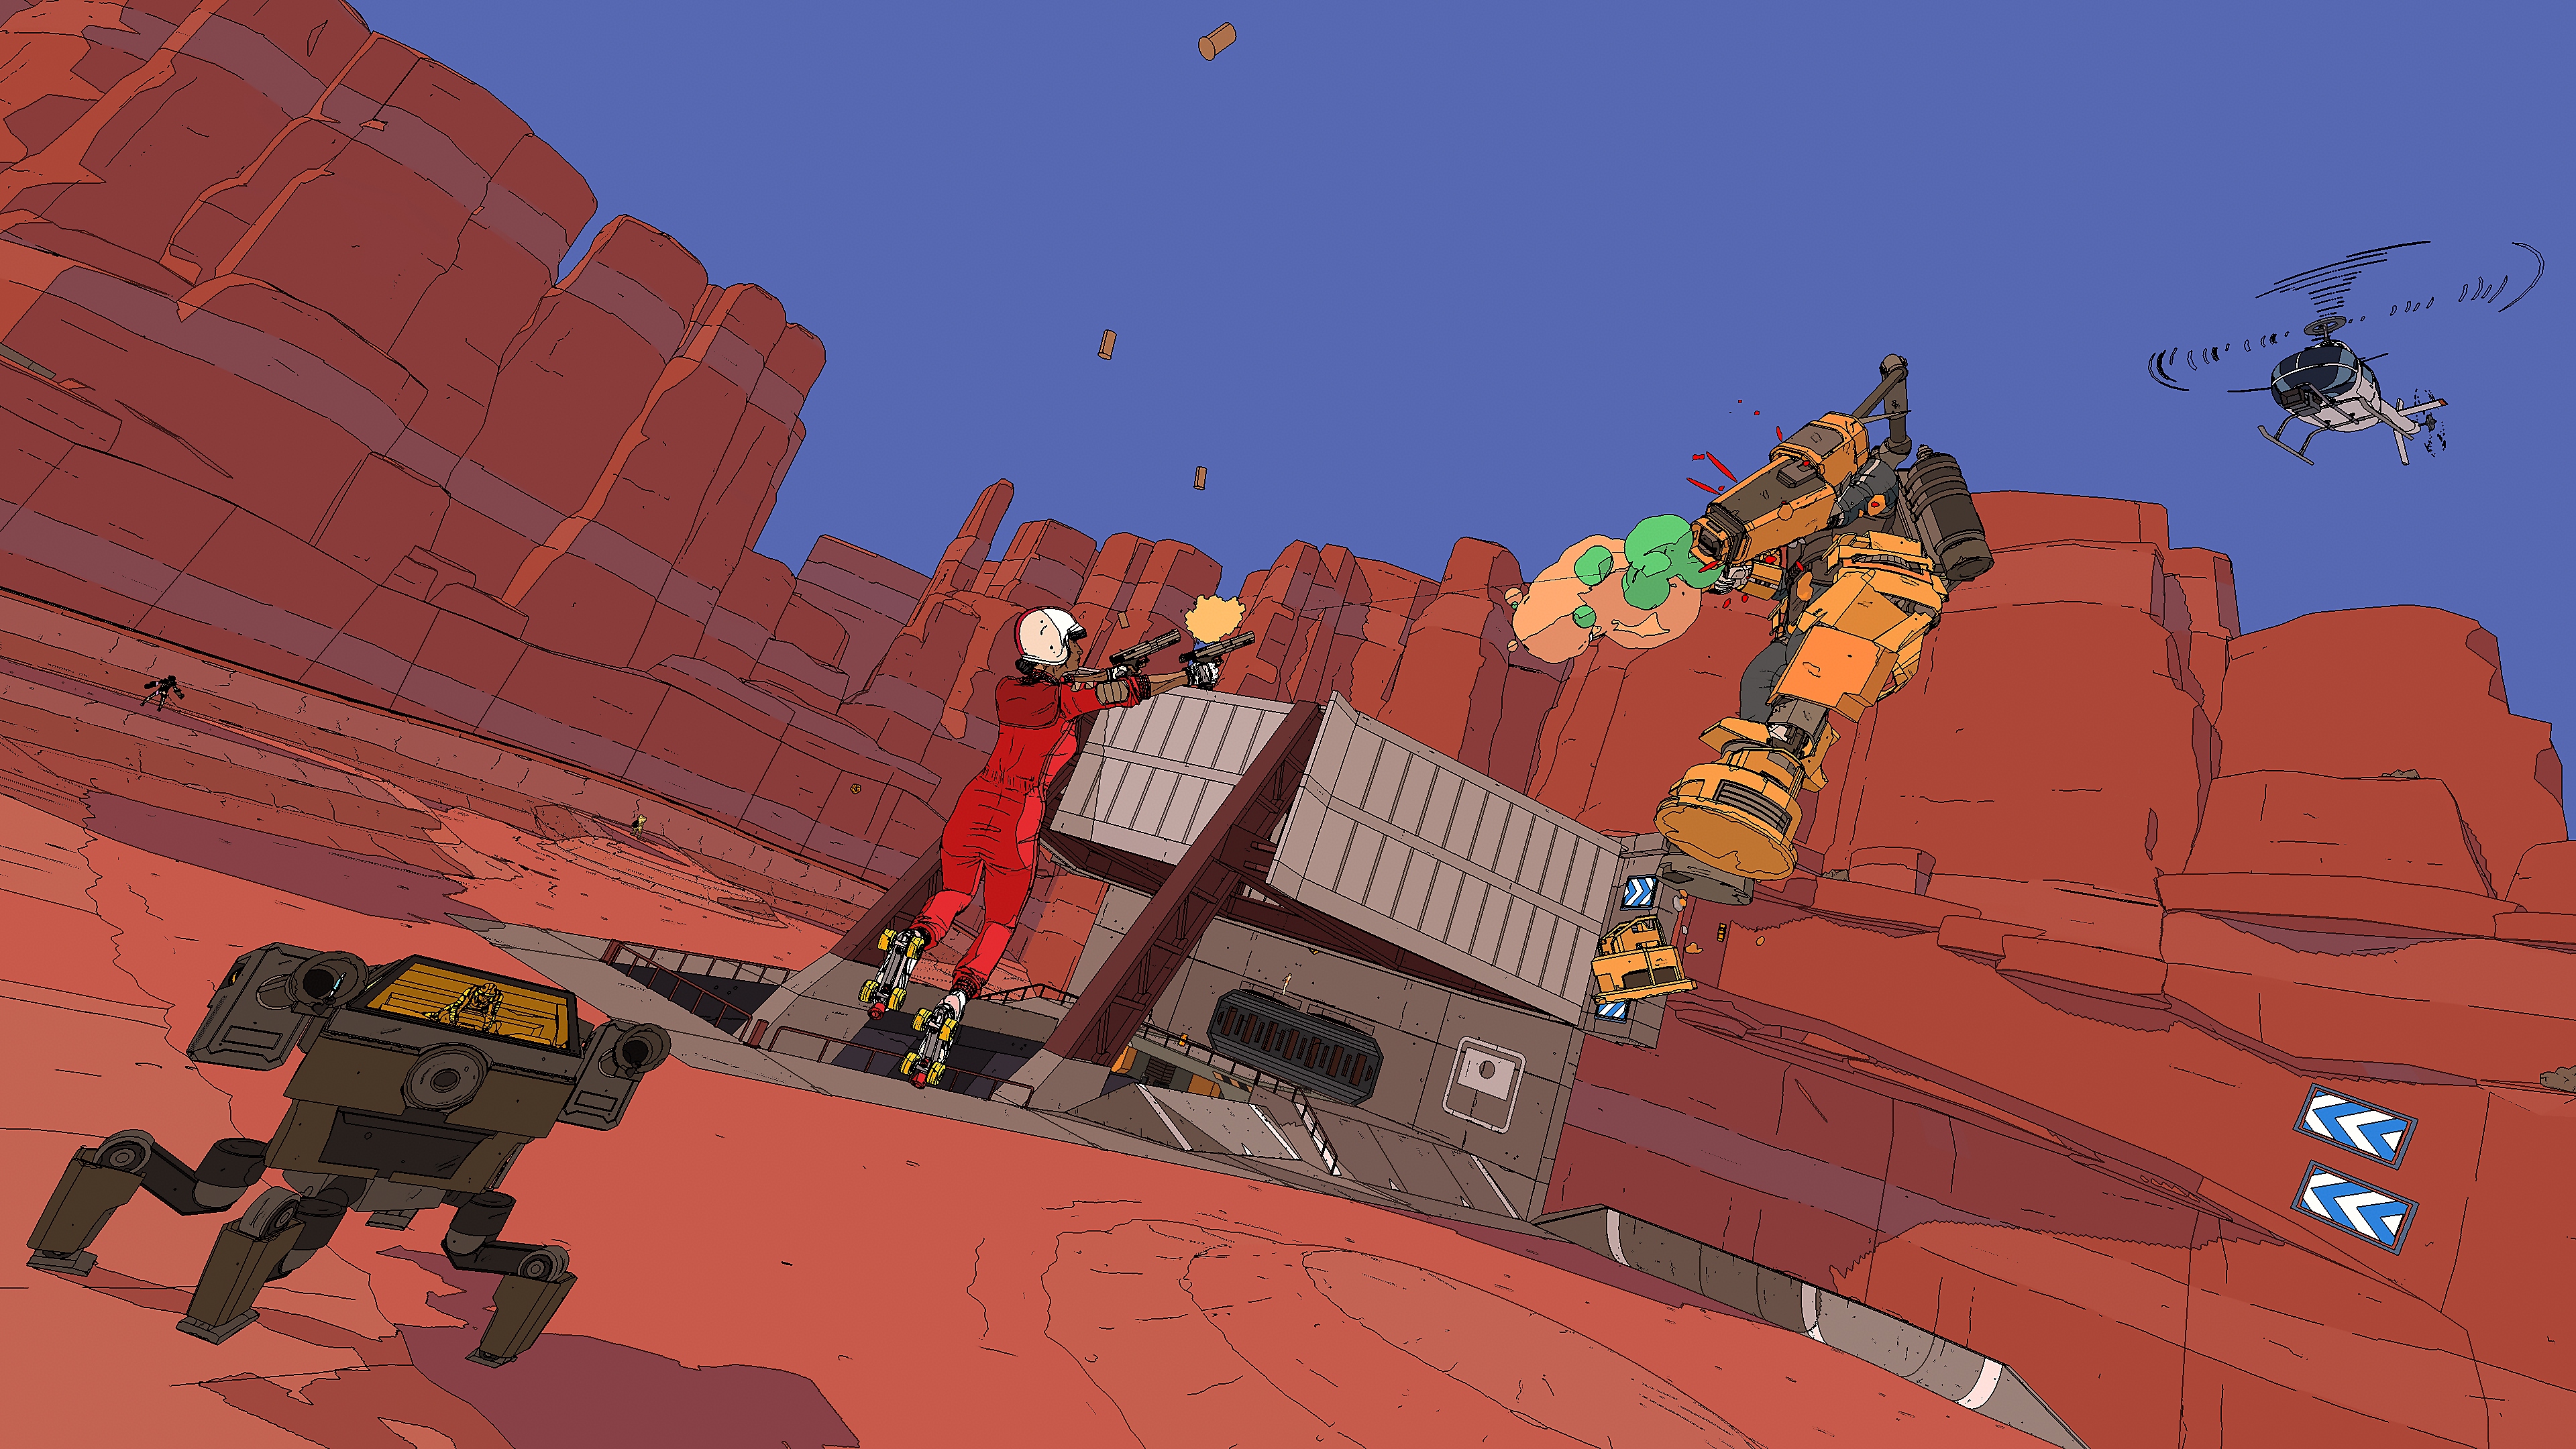 Captura de pantalla de Rollerdrome mostrando combate